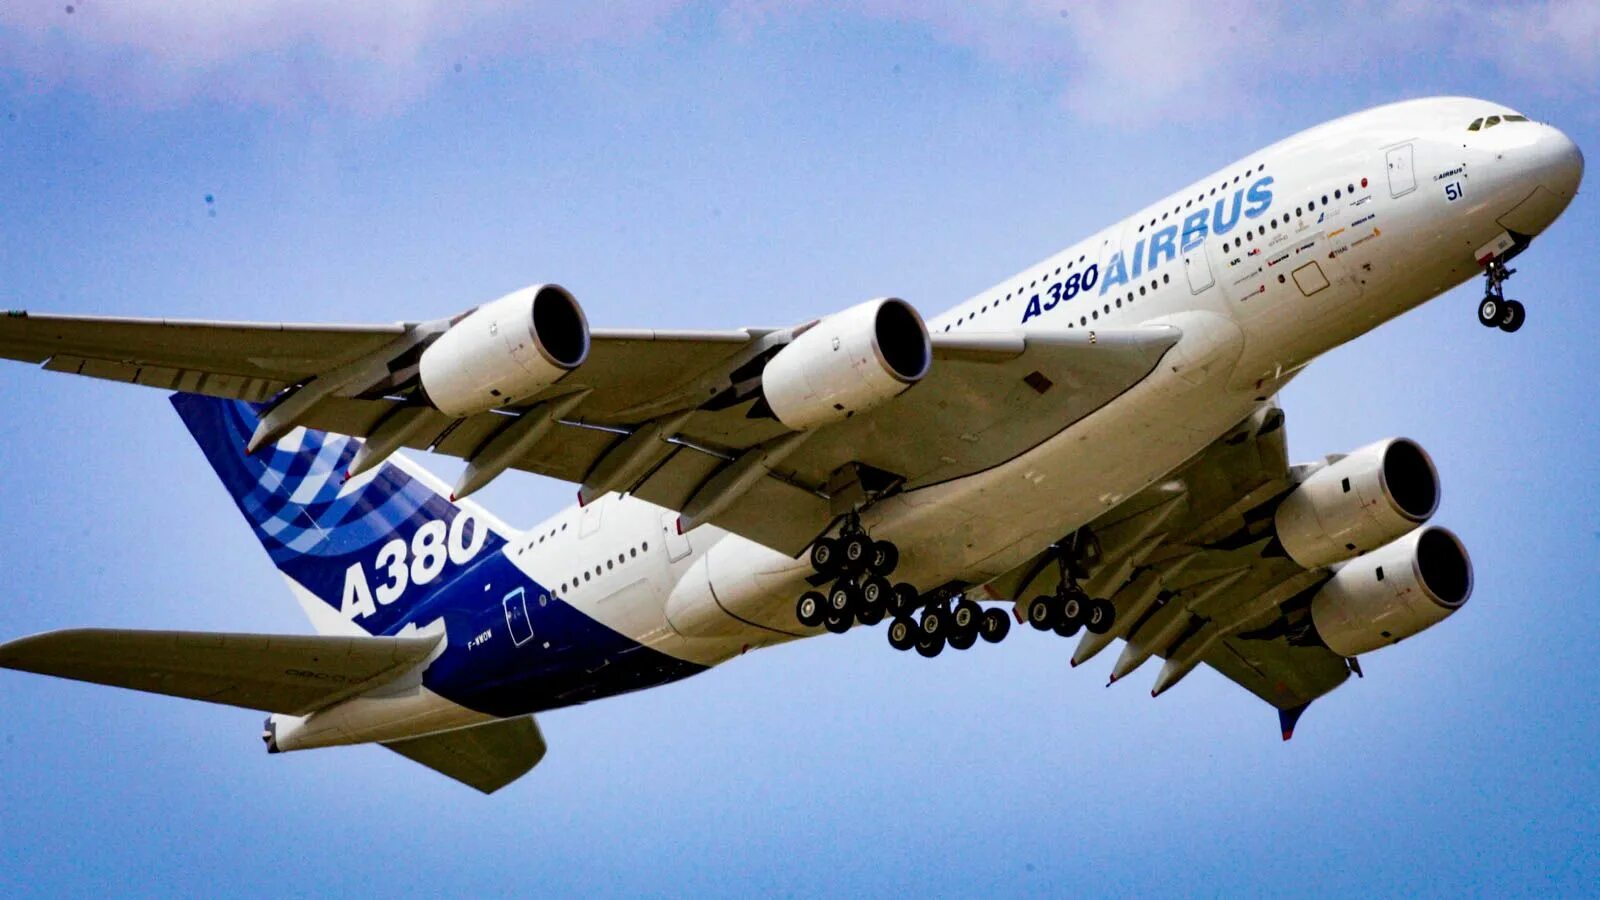 Пассажирский самолёт Аэробус а380. A380 SUPERJUMBO. Аэробус а380 супер джамбо. Airbus a380 vs Boeing 747.